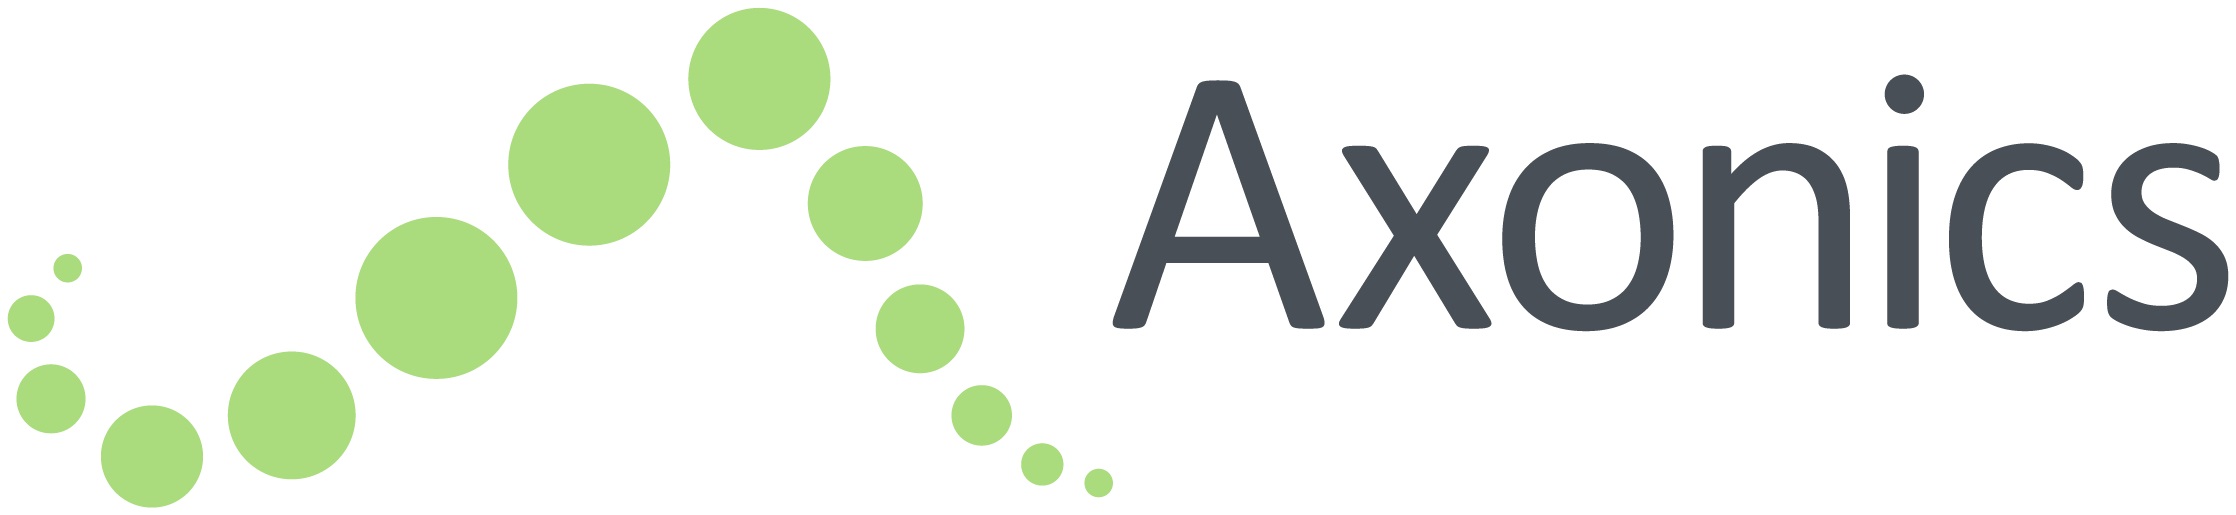 Axonics logo_color no tag_large.jpg